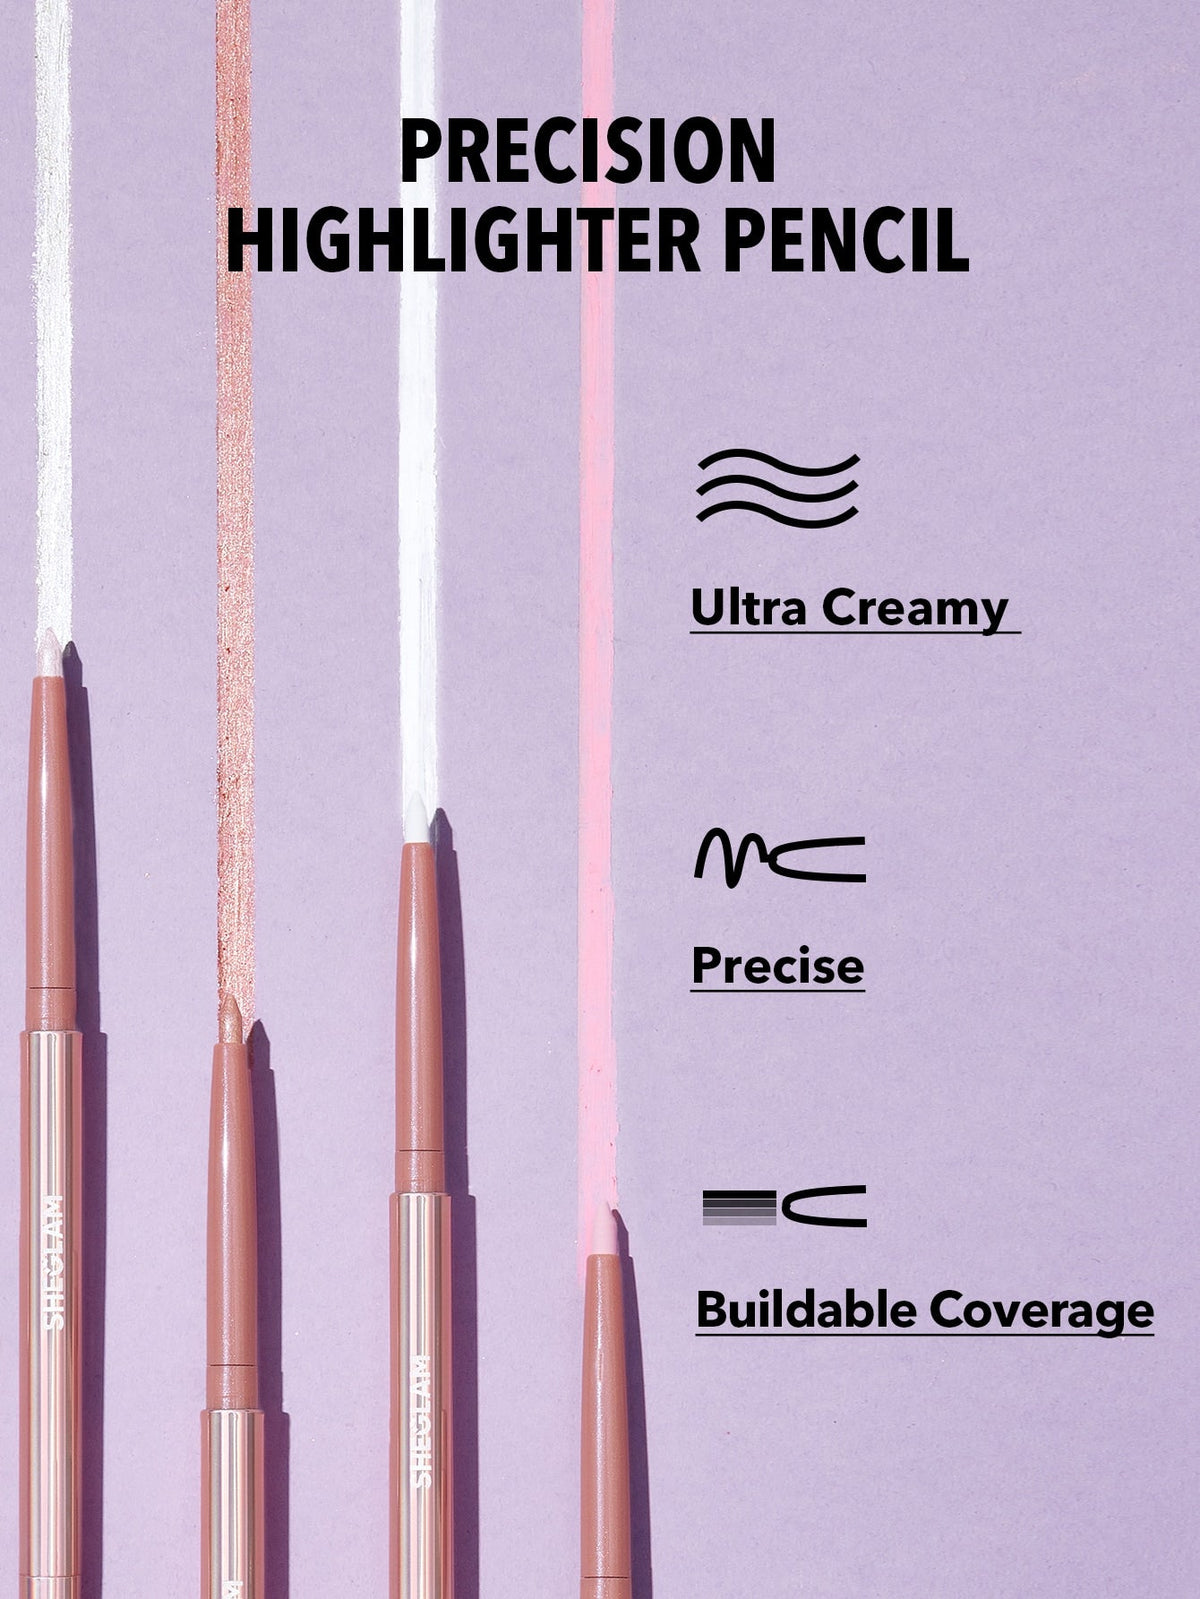 Sheglam Fairy Wand Precision Highlighter Pencil-Starlight